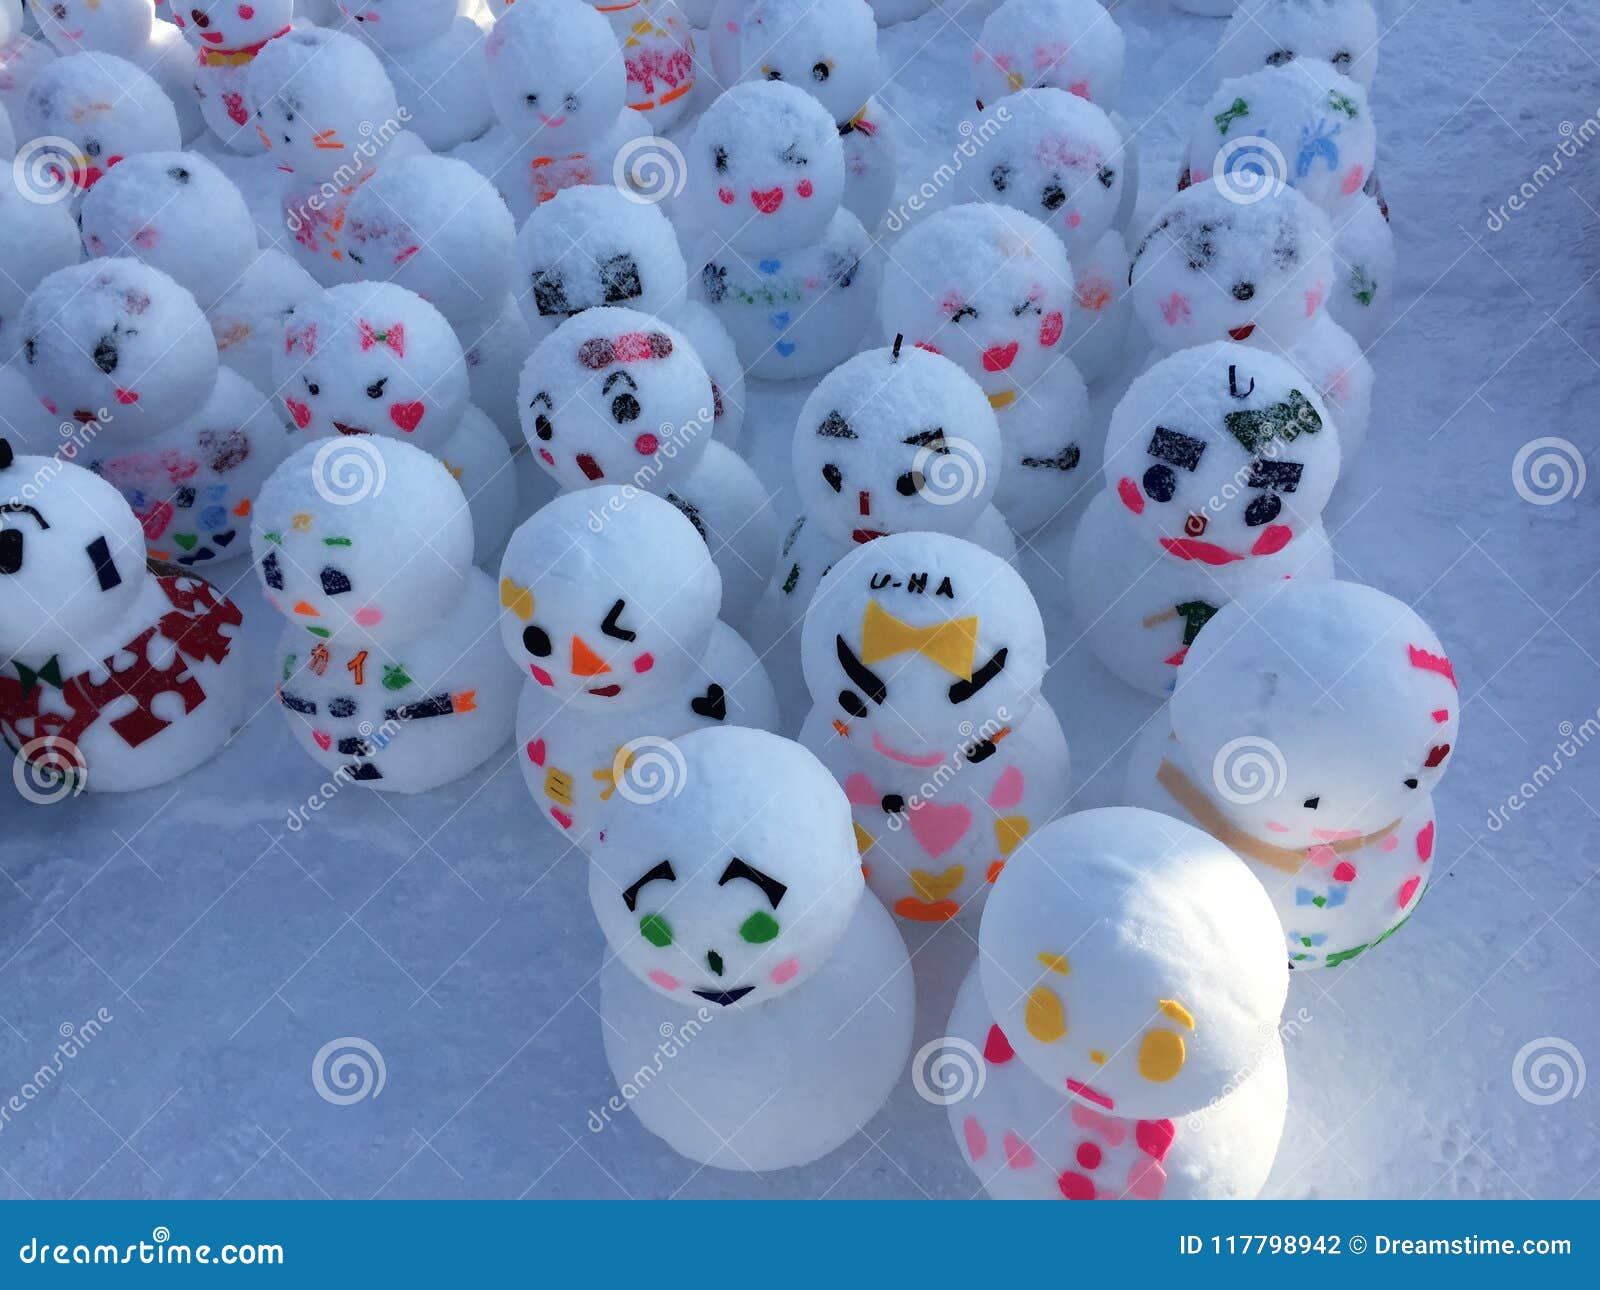 Mini Snowman stock photo. Image of hokkaido, snowman - 202894002